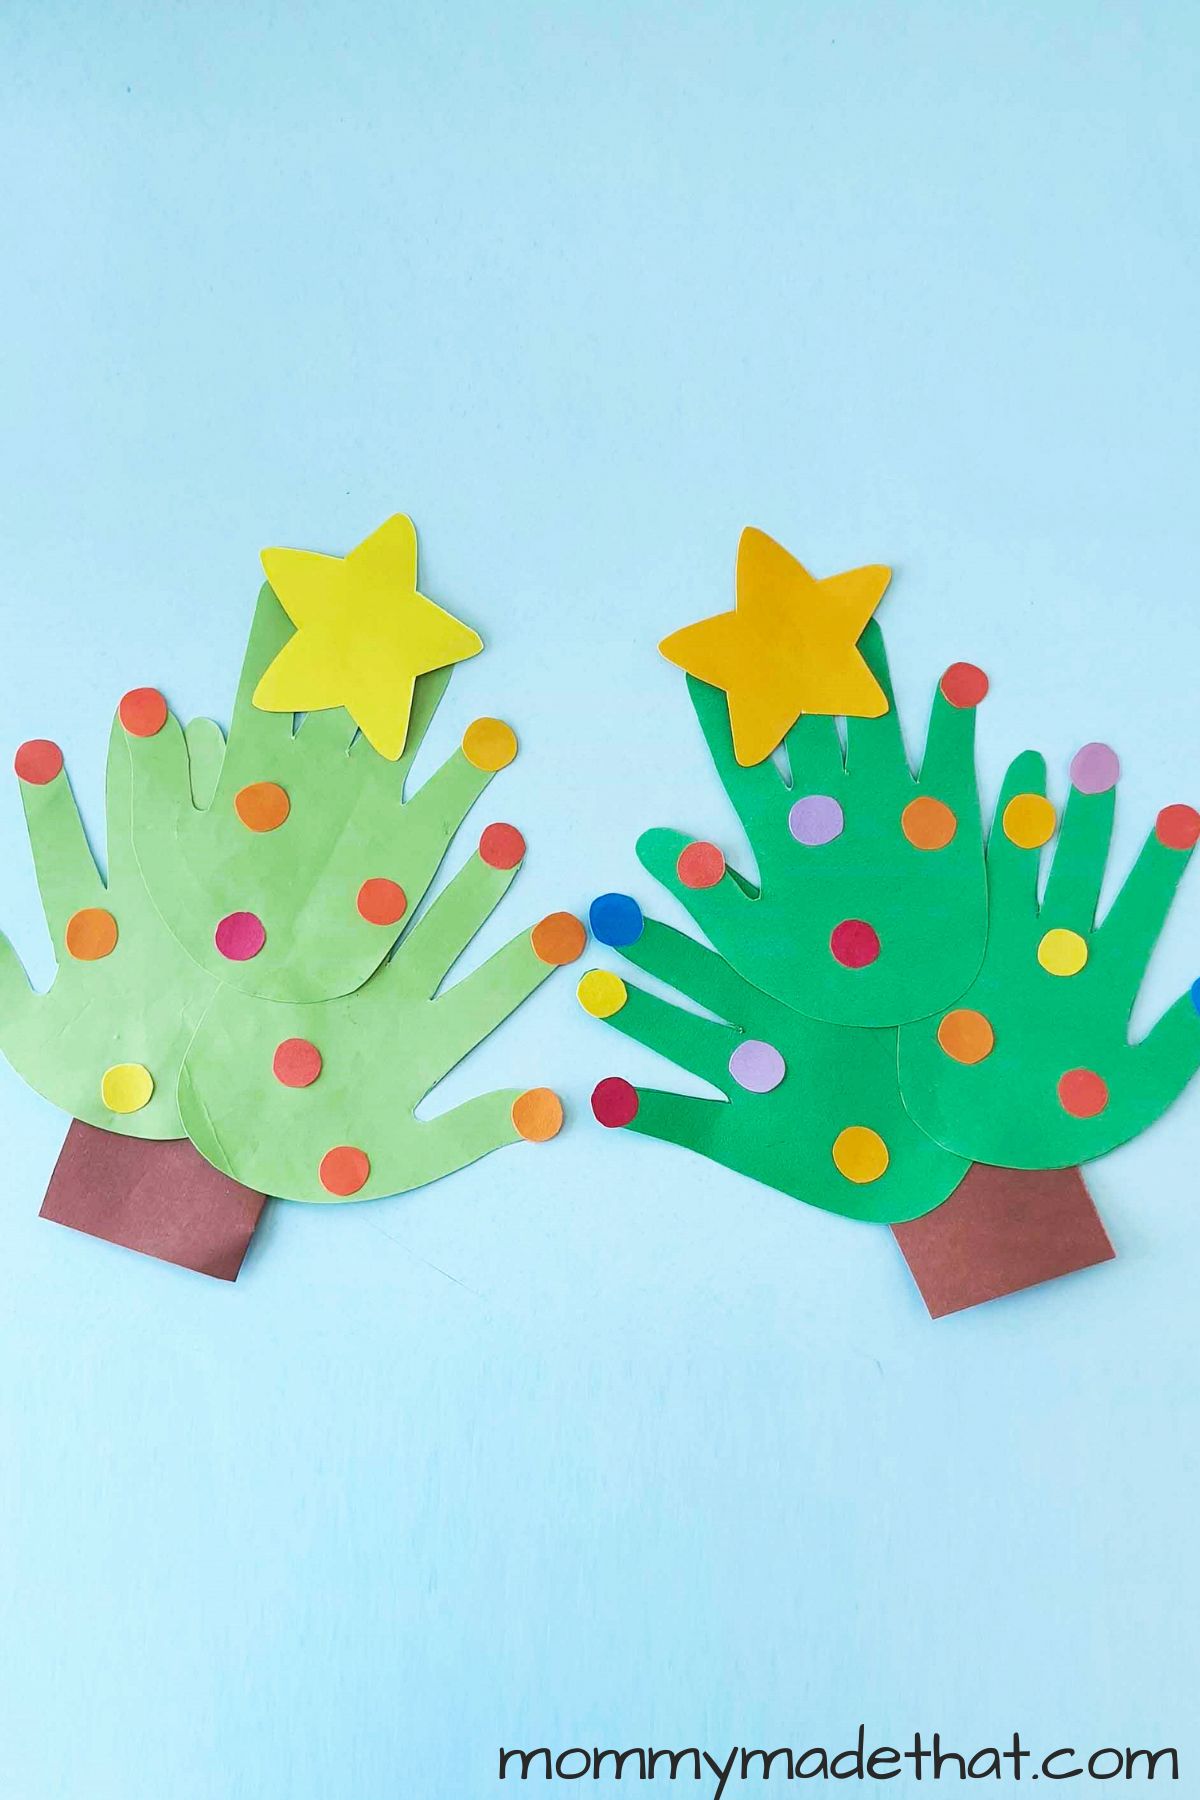 Handprint Christmas tree craft